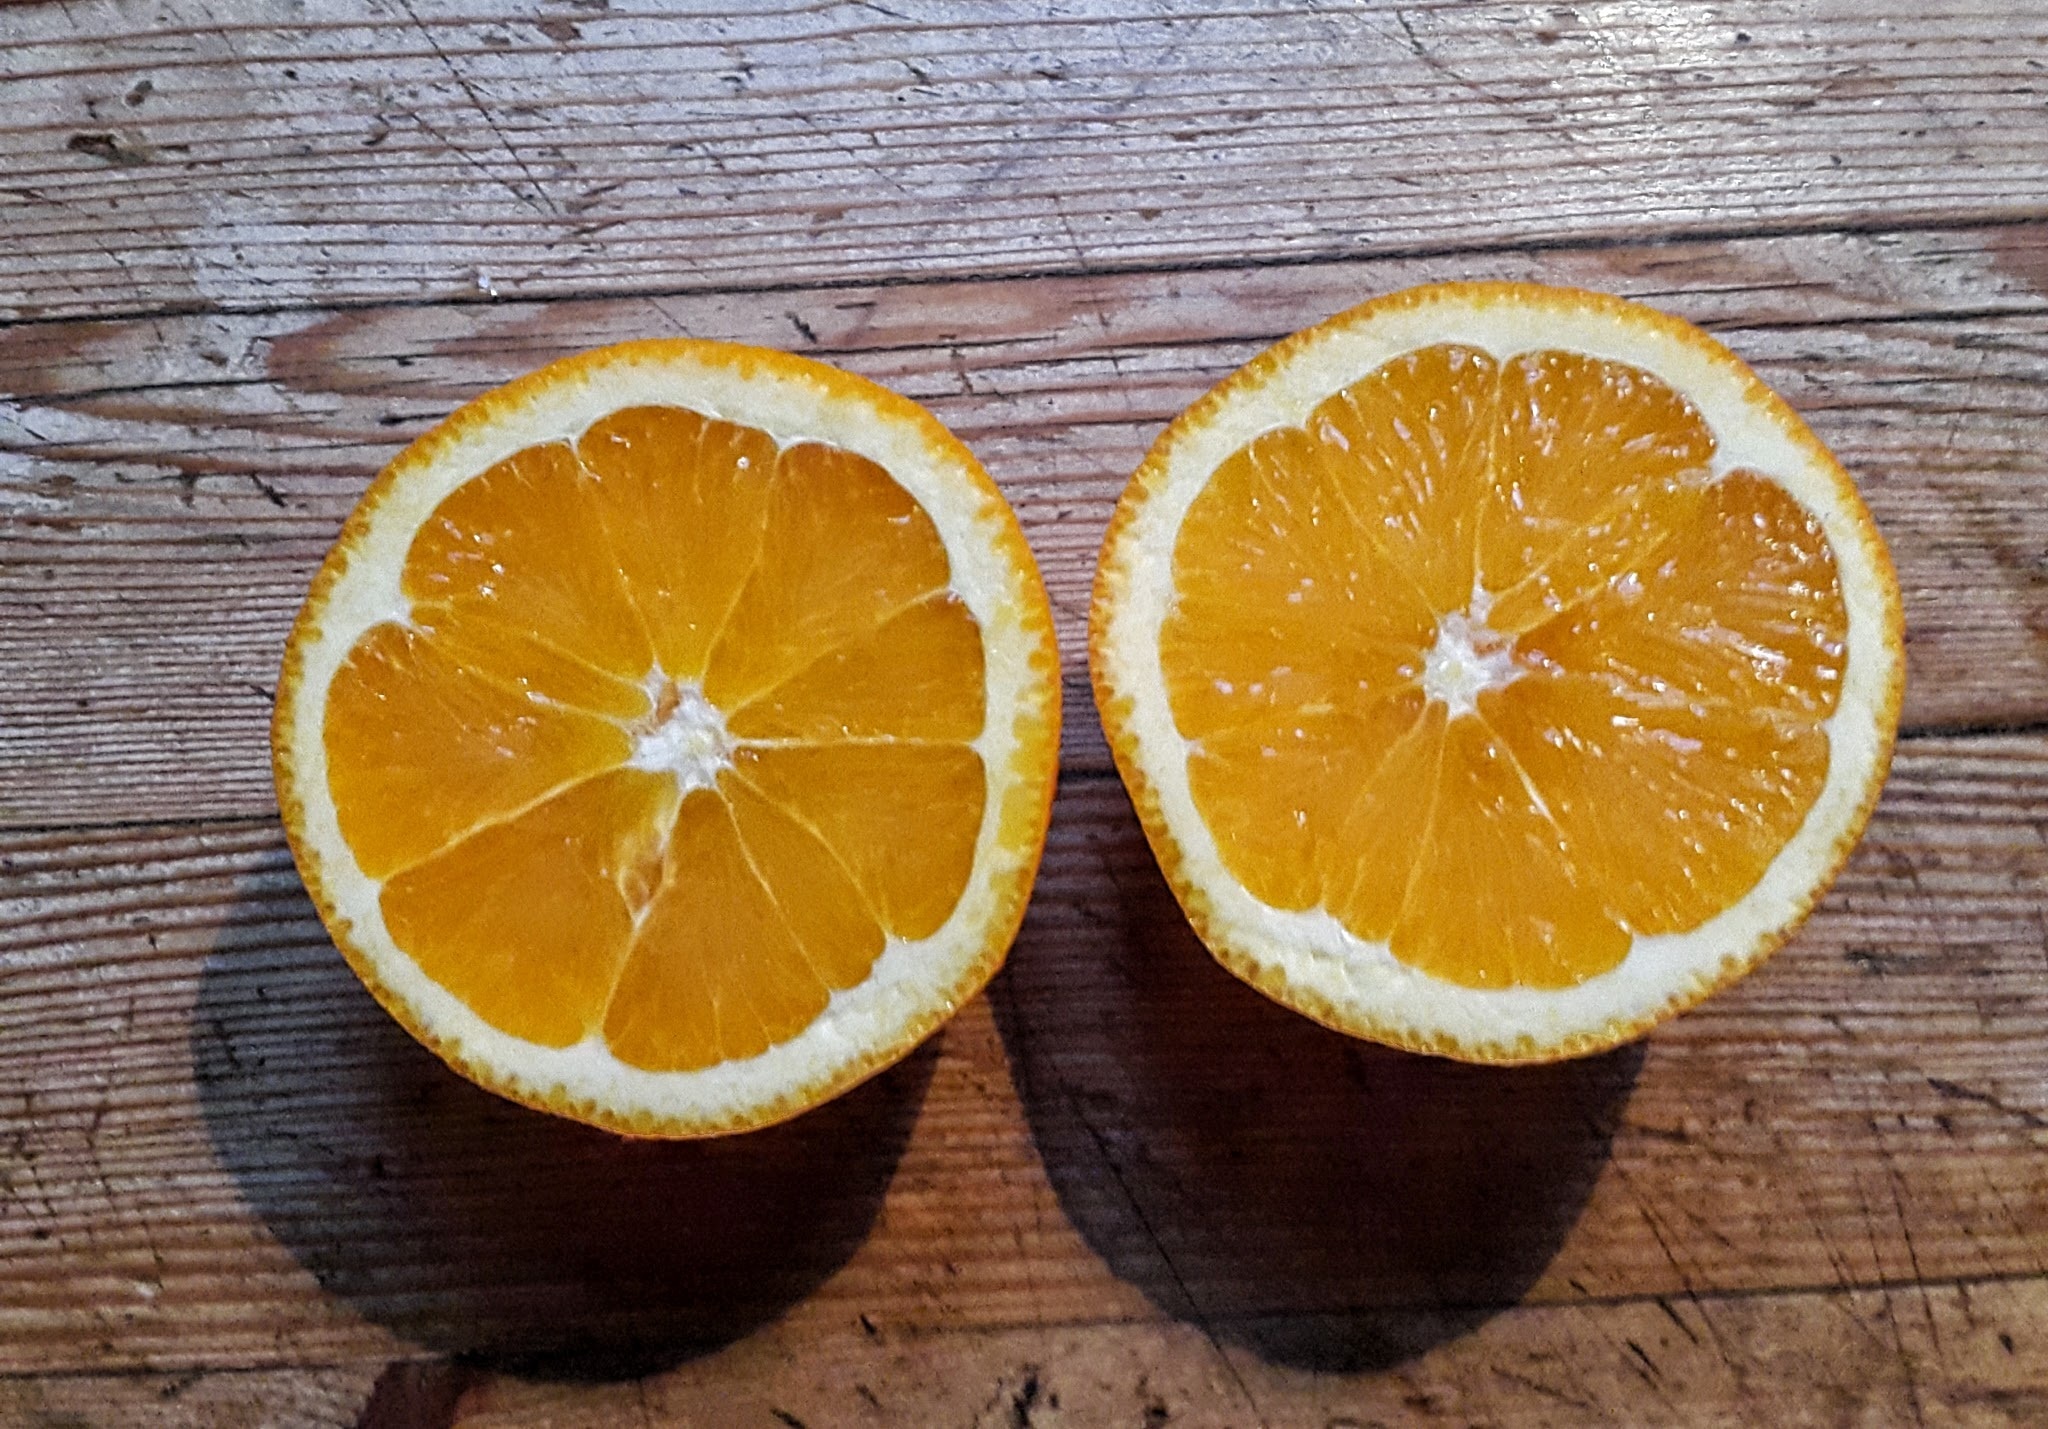 slice orange fruit